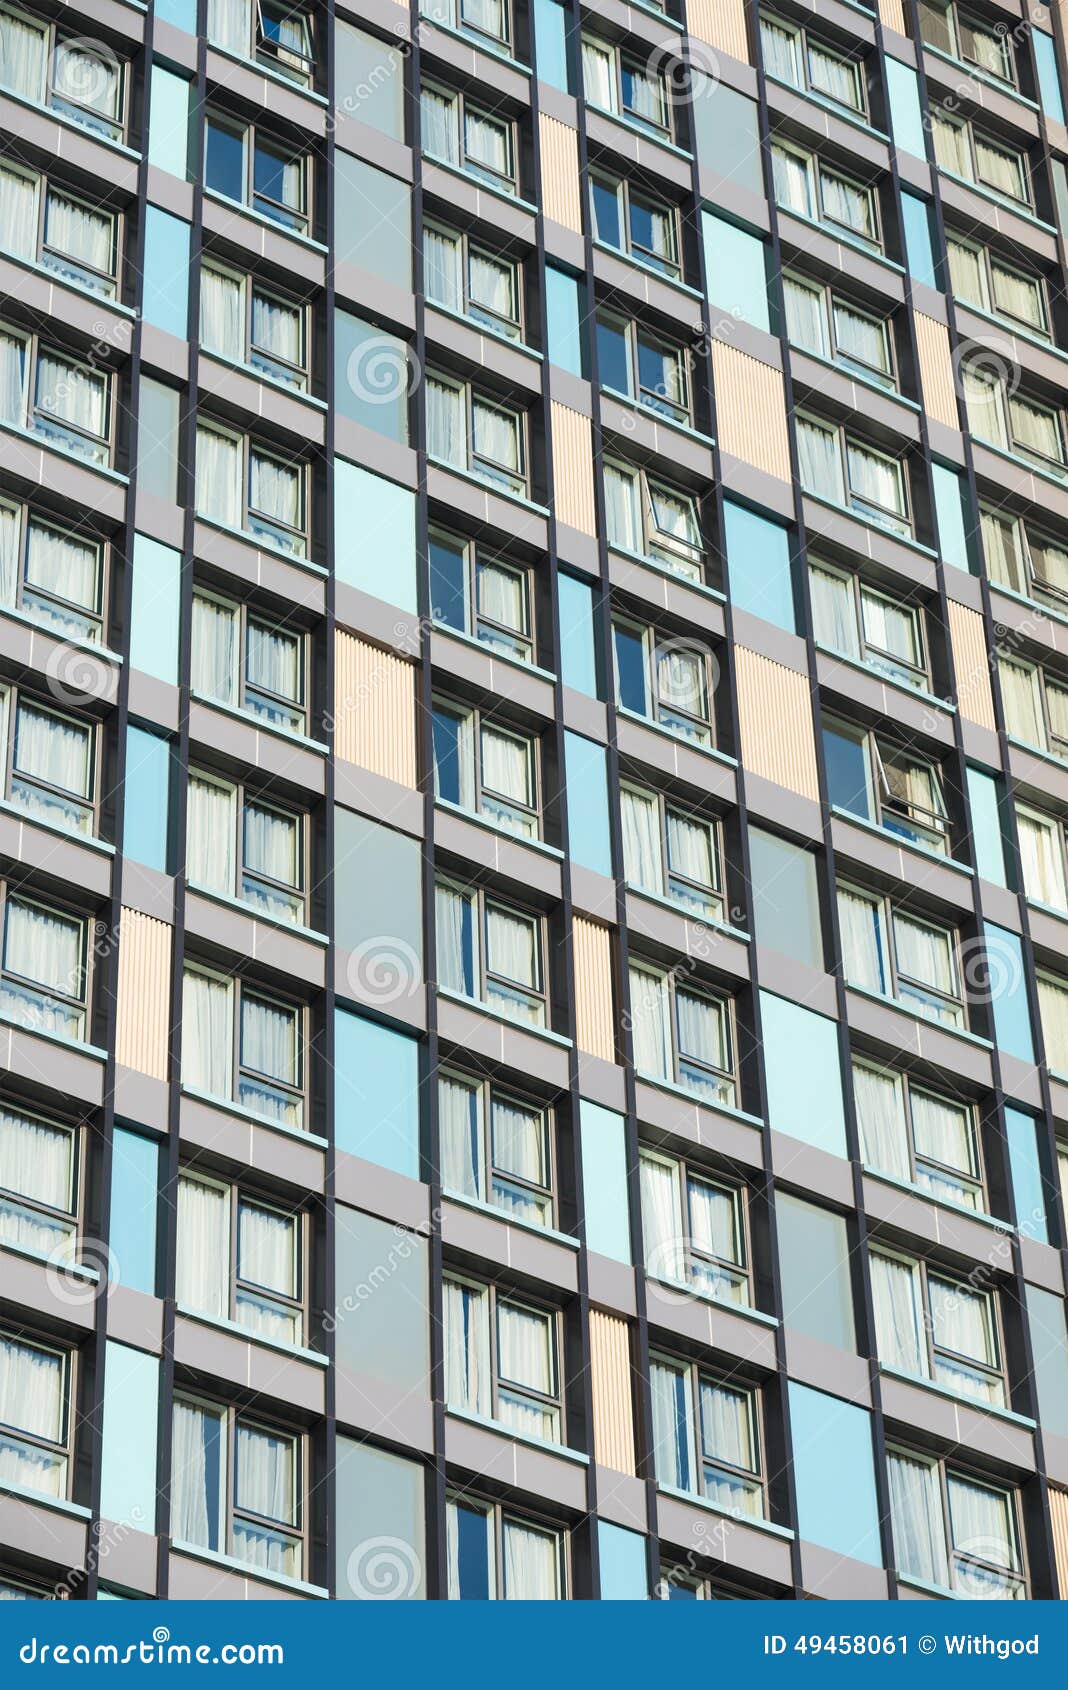 many windows of multistorey building